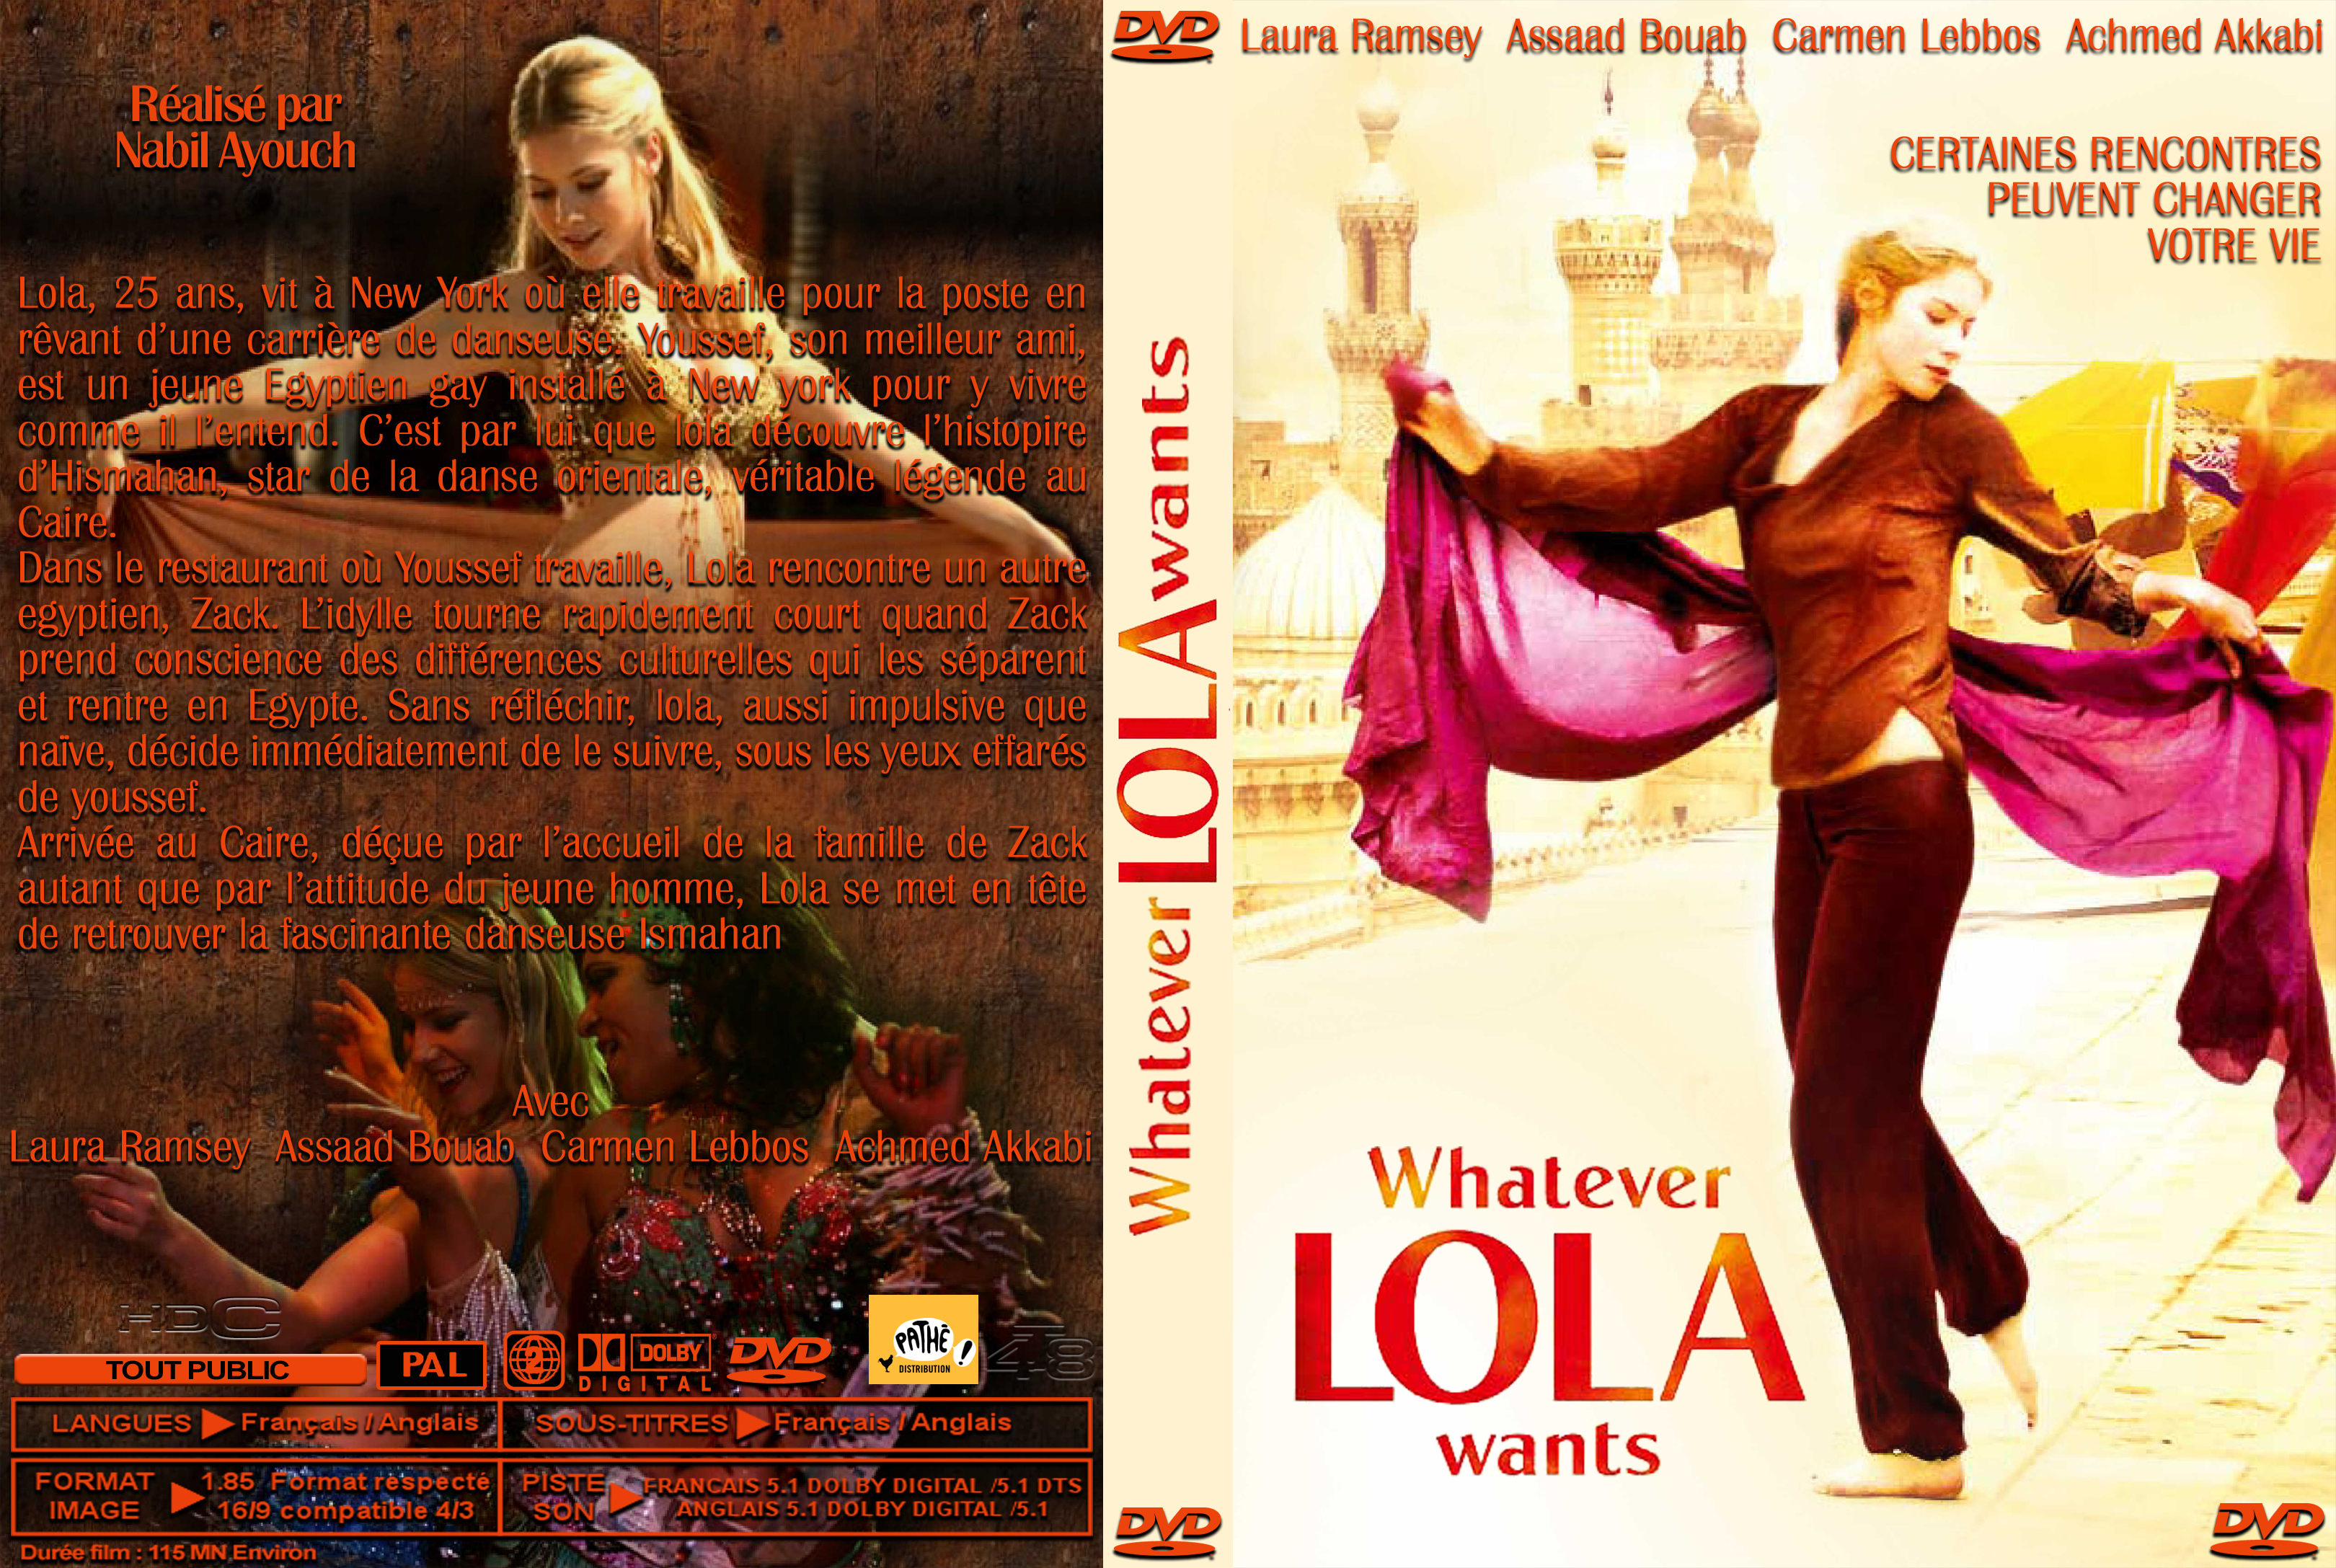 Jaquette DVD Whatever Lola wants csutom v2